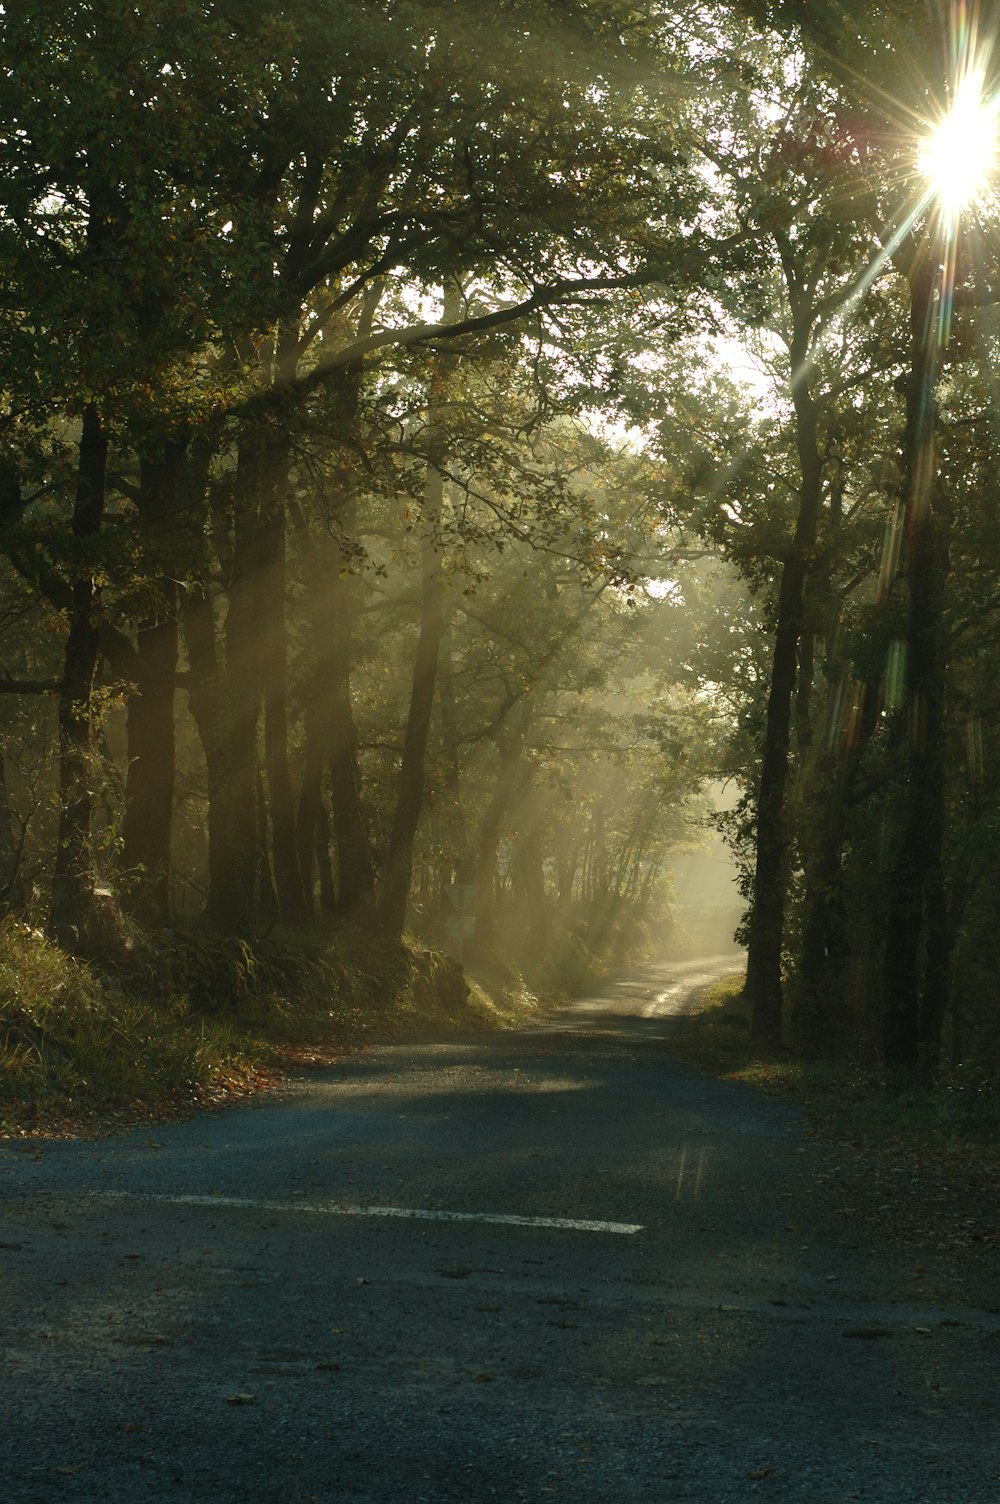 estrada cinzenta entre árvores verdes durante o dia